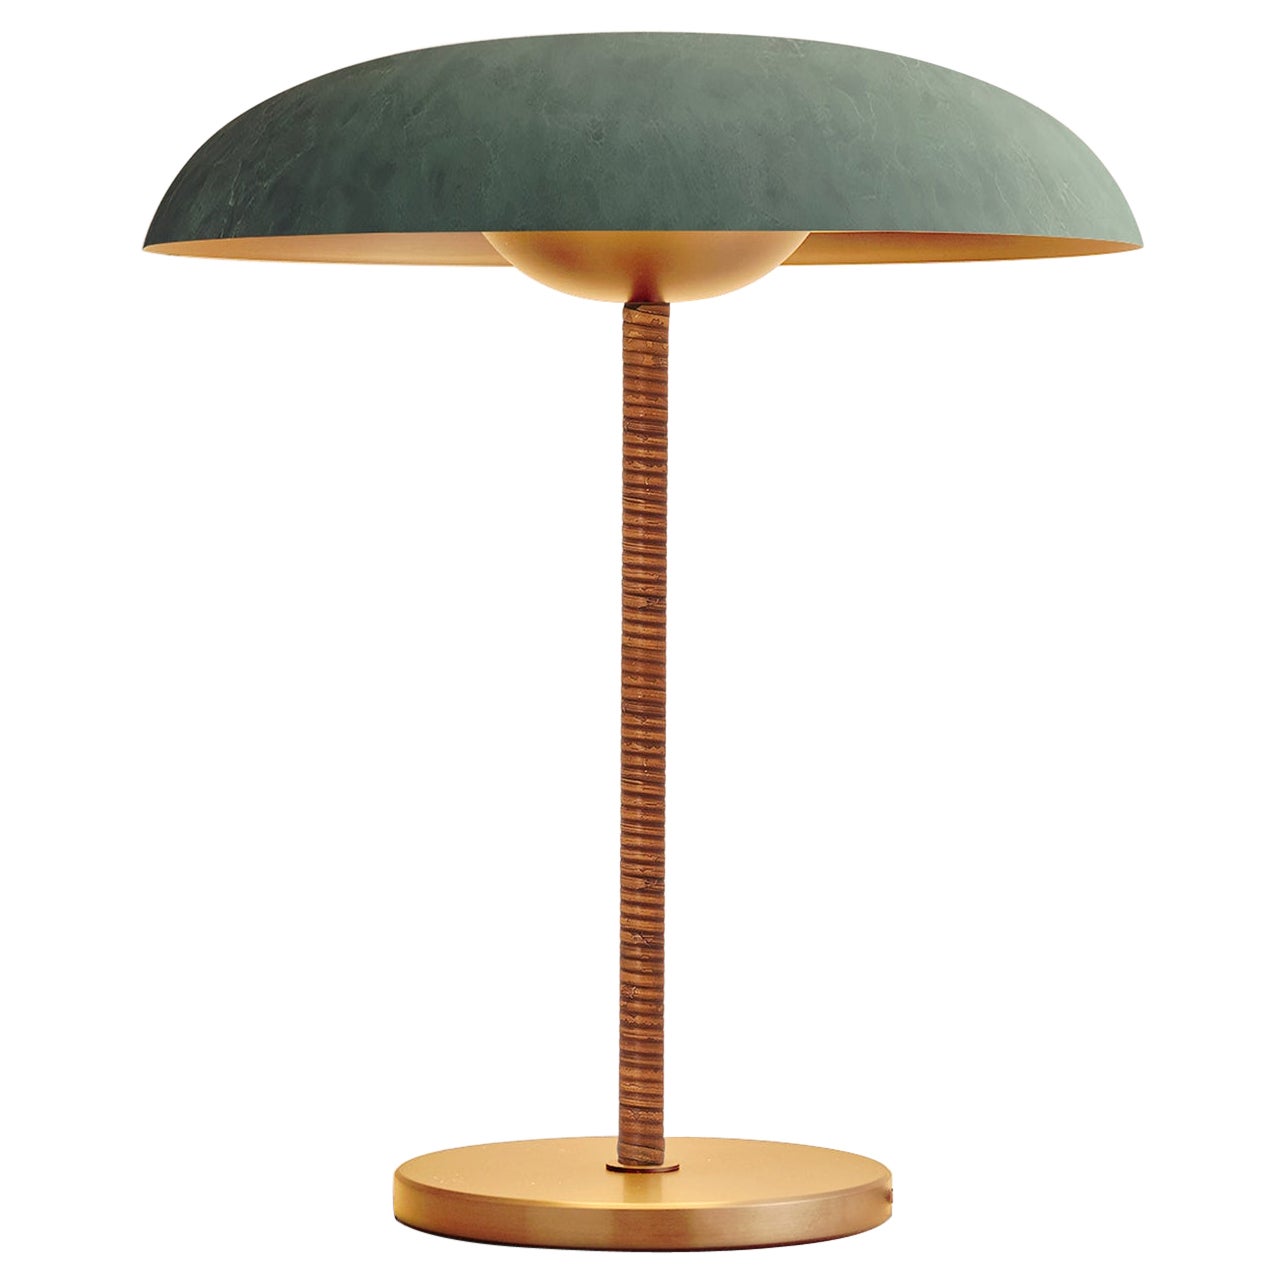 'Cosmic Solstice Verdigris' Table Lamp, Handmade Verdigris Patinated Brass Light